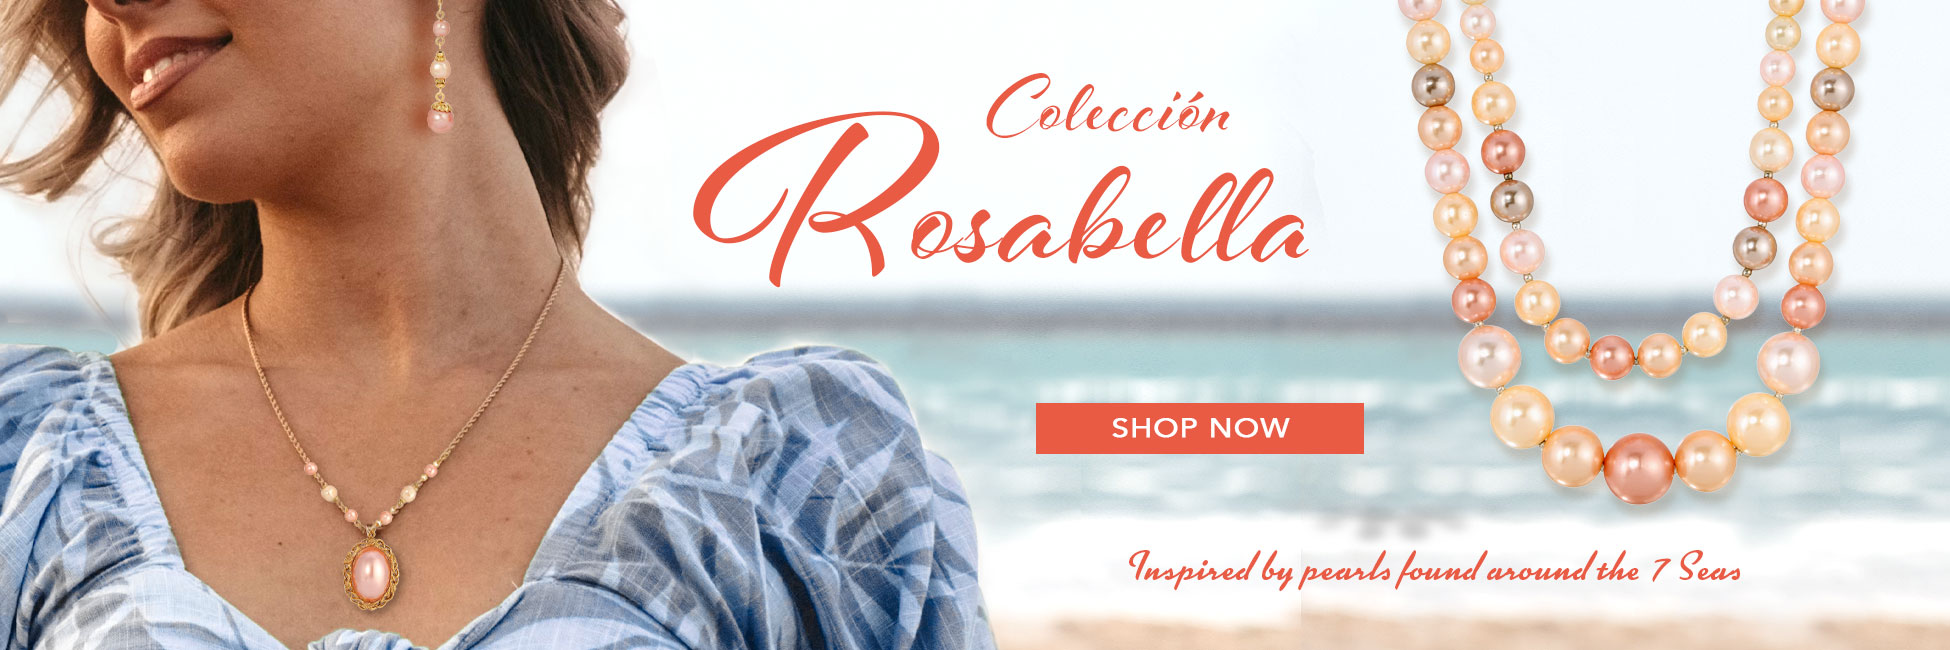 rosabella-Banner2-1920x600